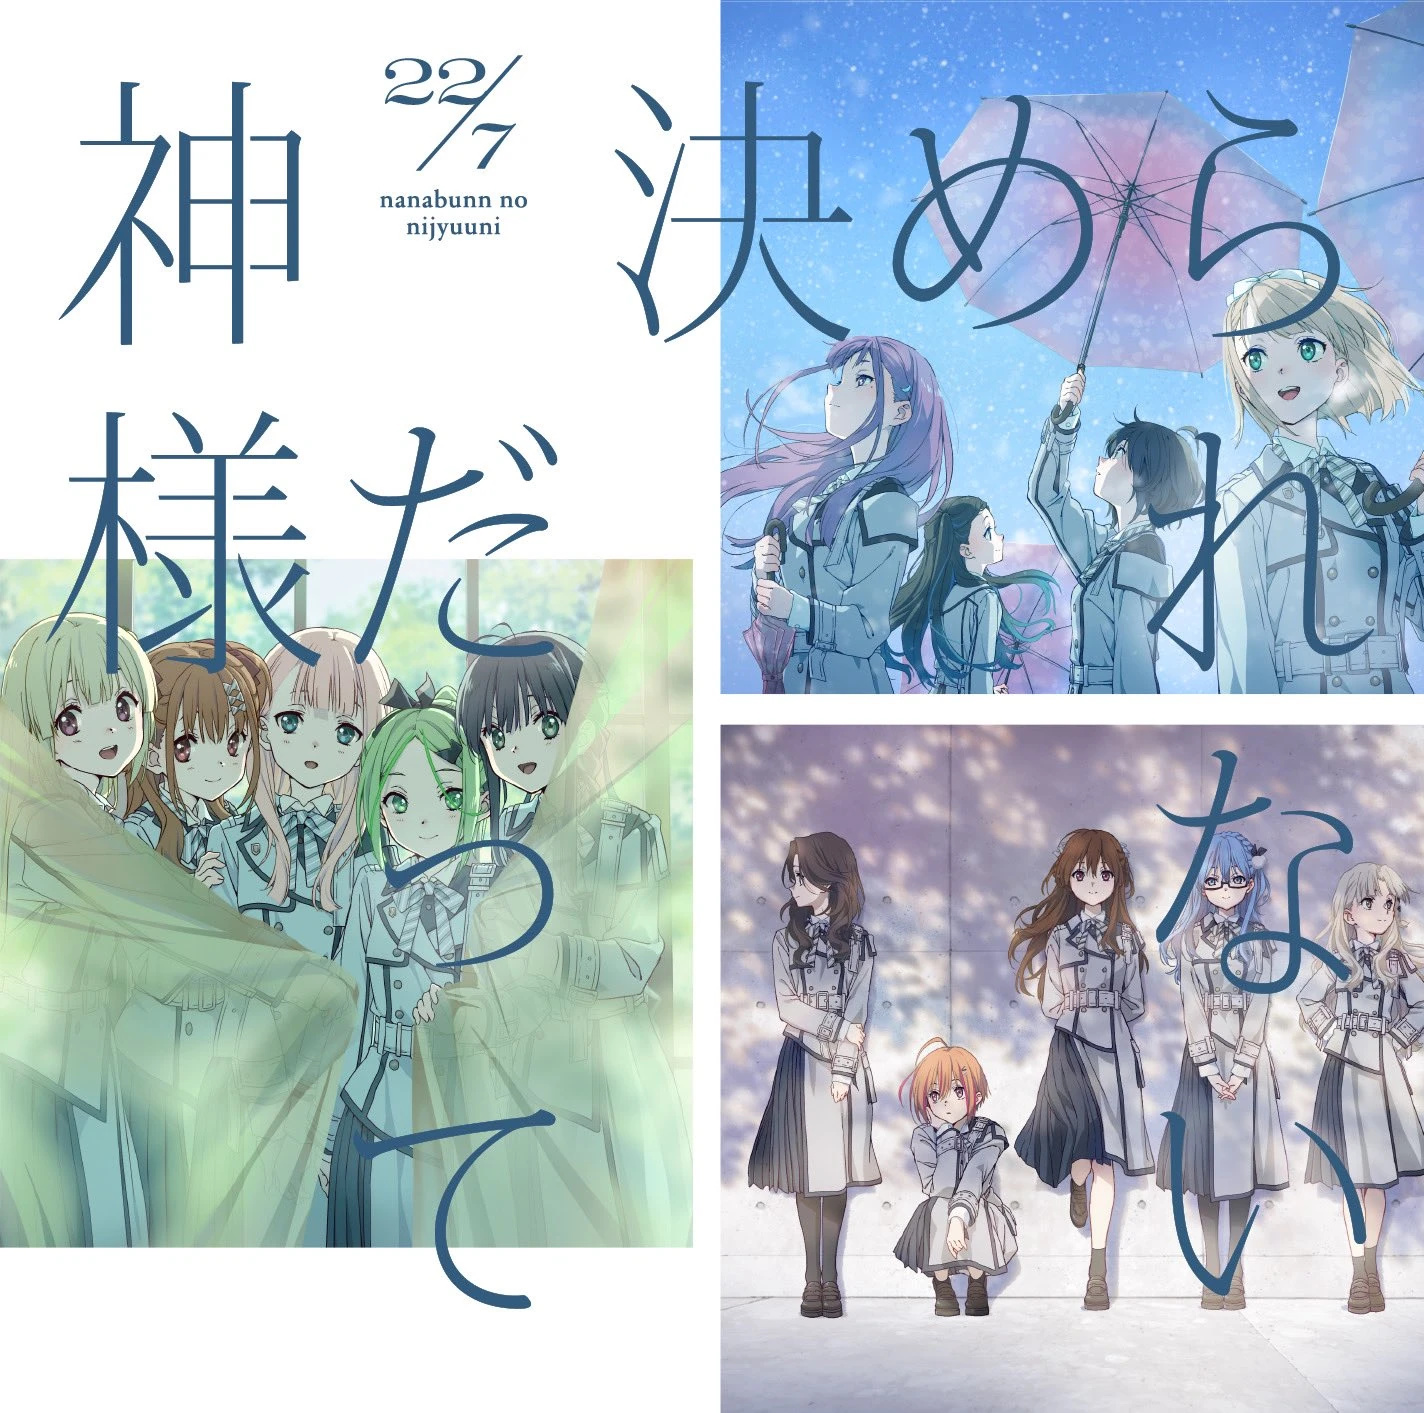 22/7 Kamisama datte kimerarenai (神様だって決められない) cover artwork